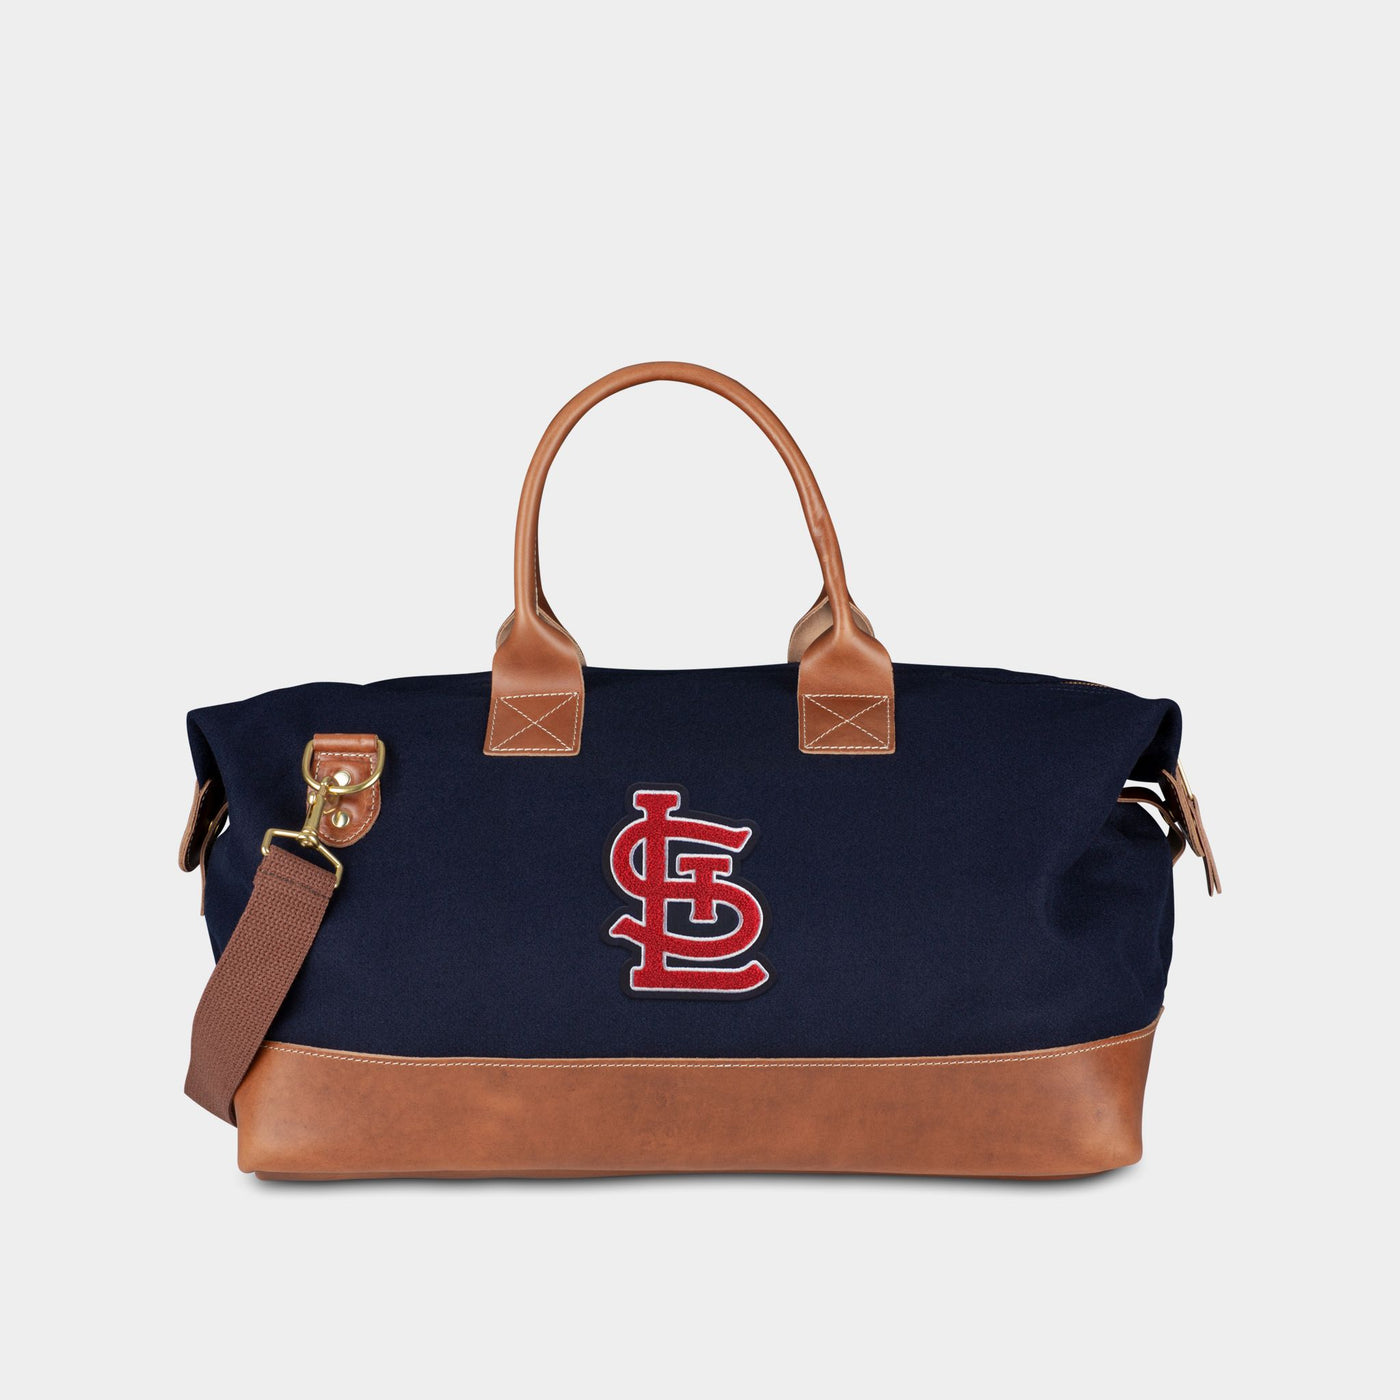 St. Louis Cardinals "St. L" Weekender Duffle Bag